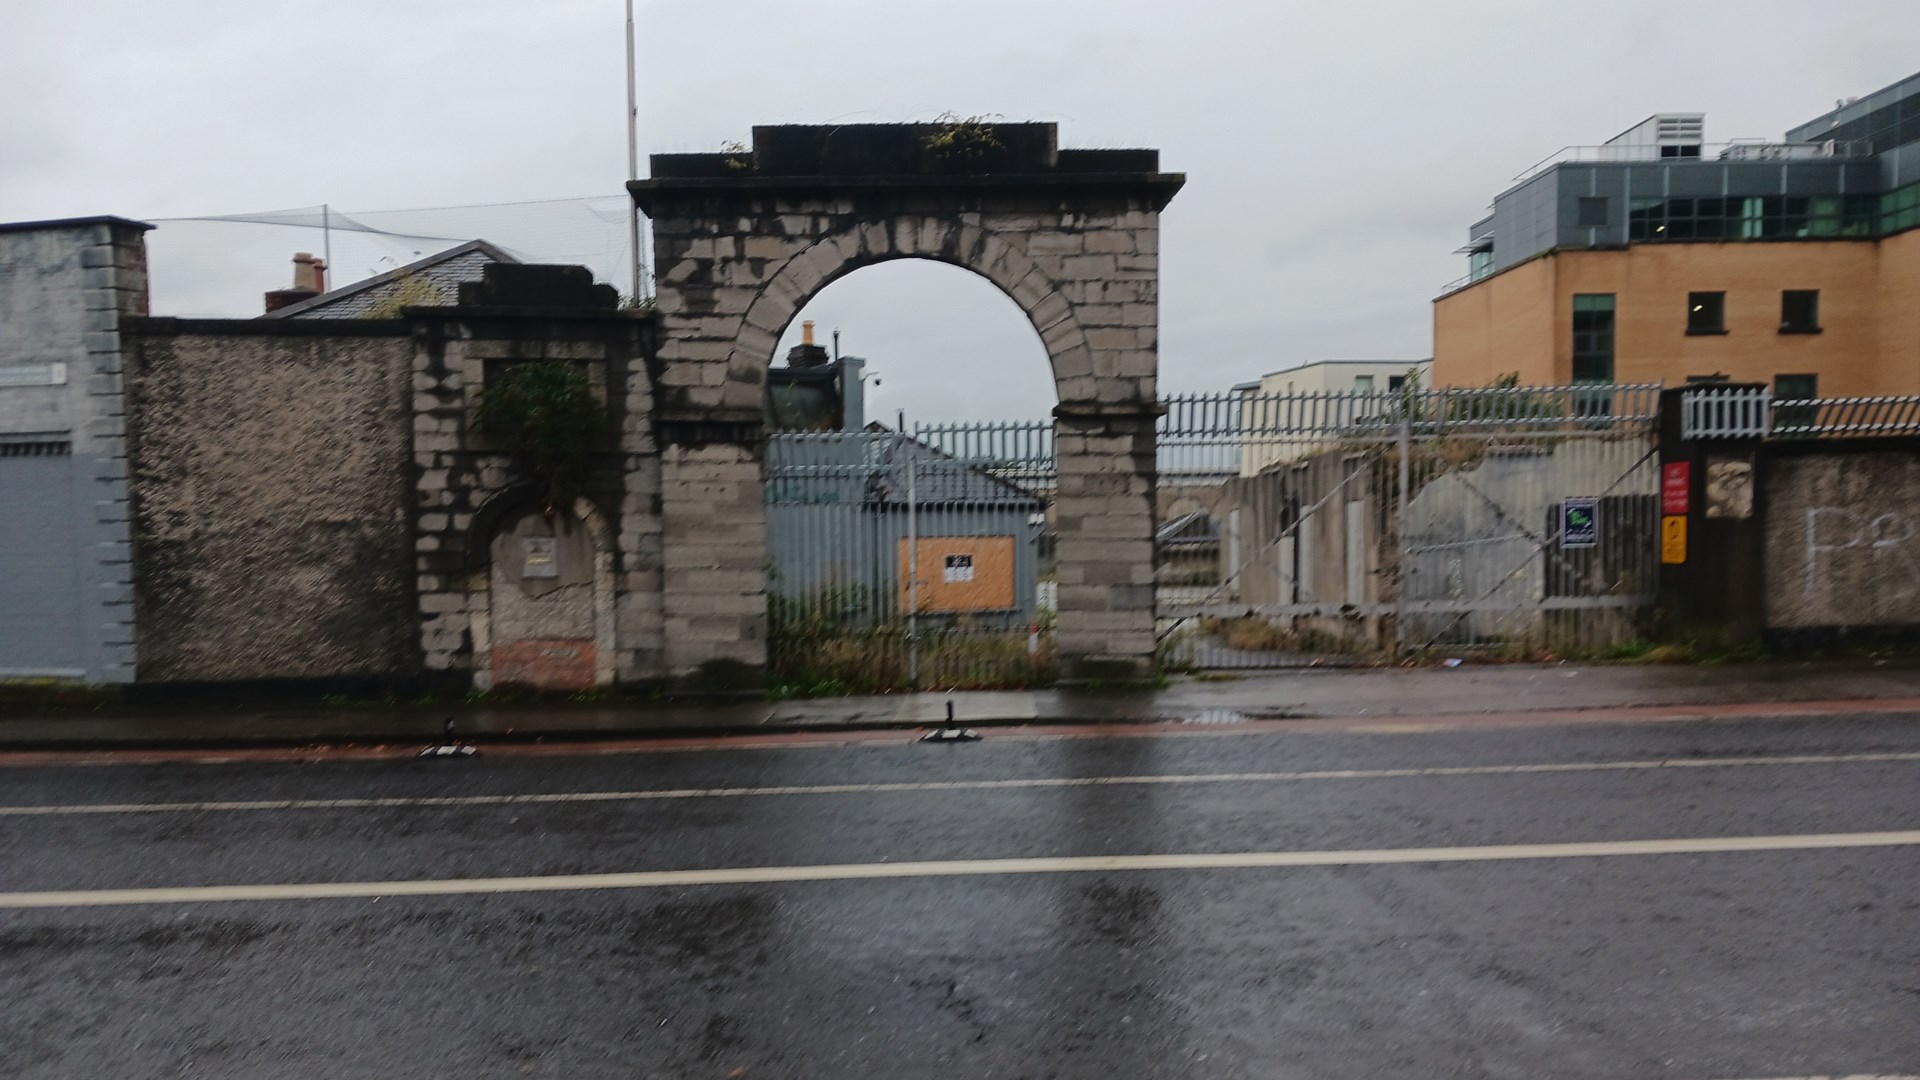 gate at clancy barracks armory street view brick buildings wet rain street lines fog clouds